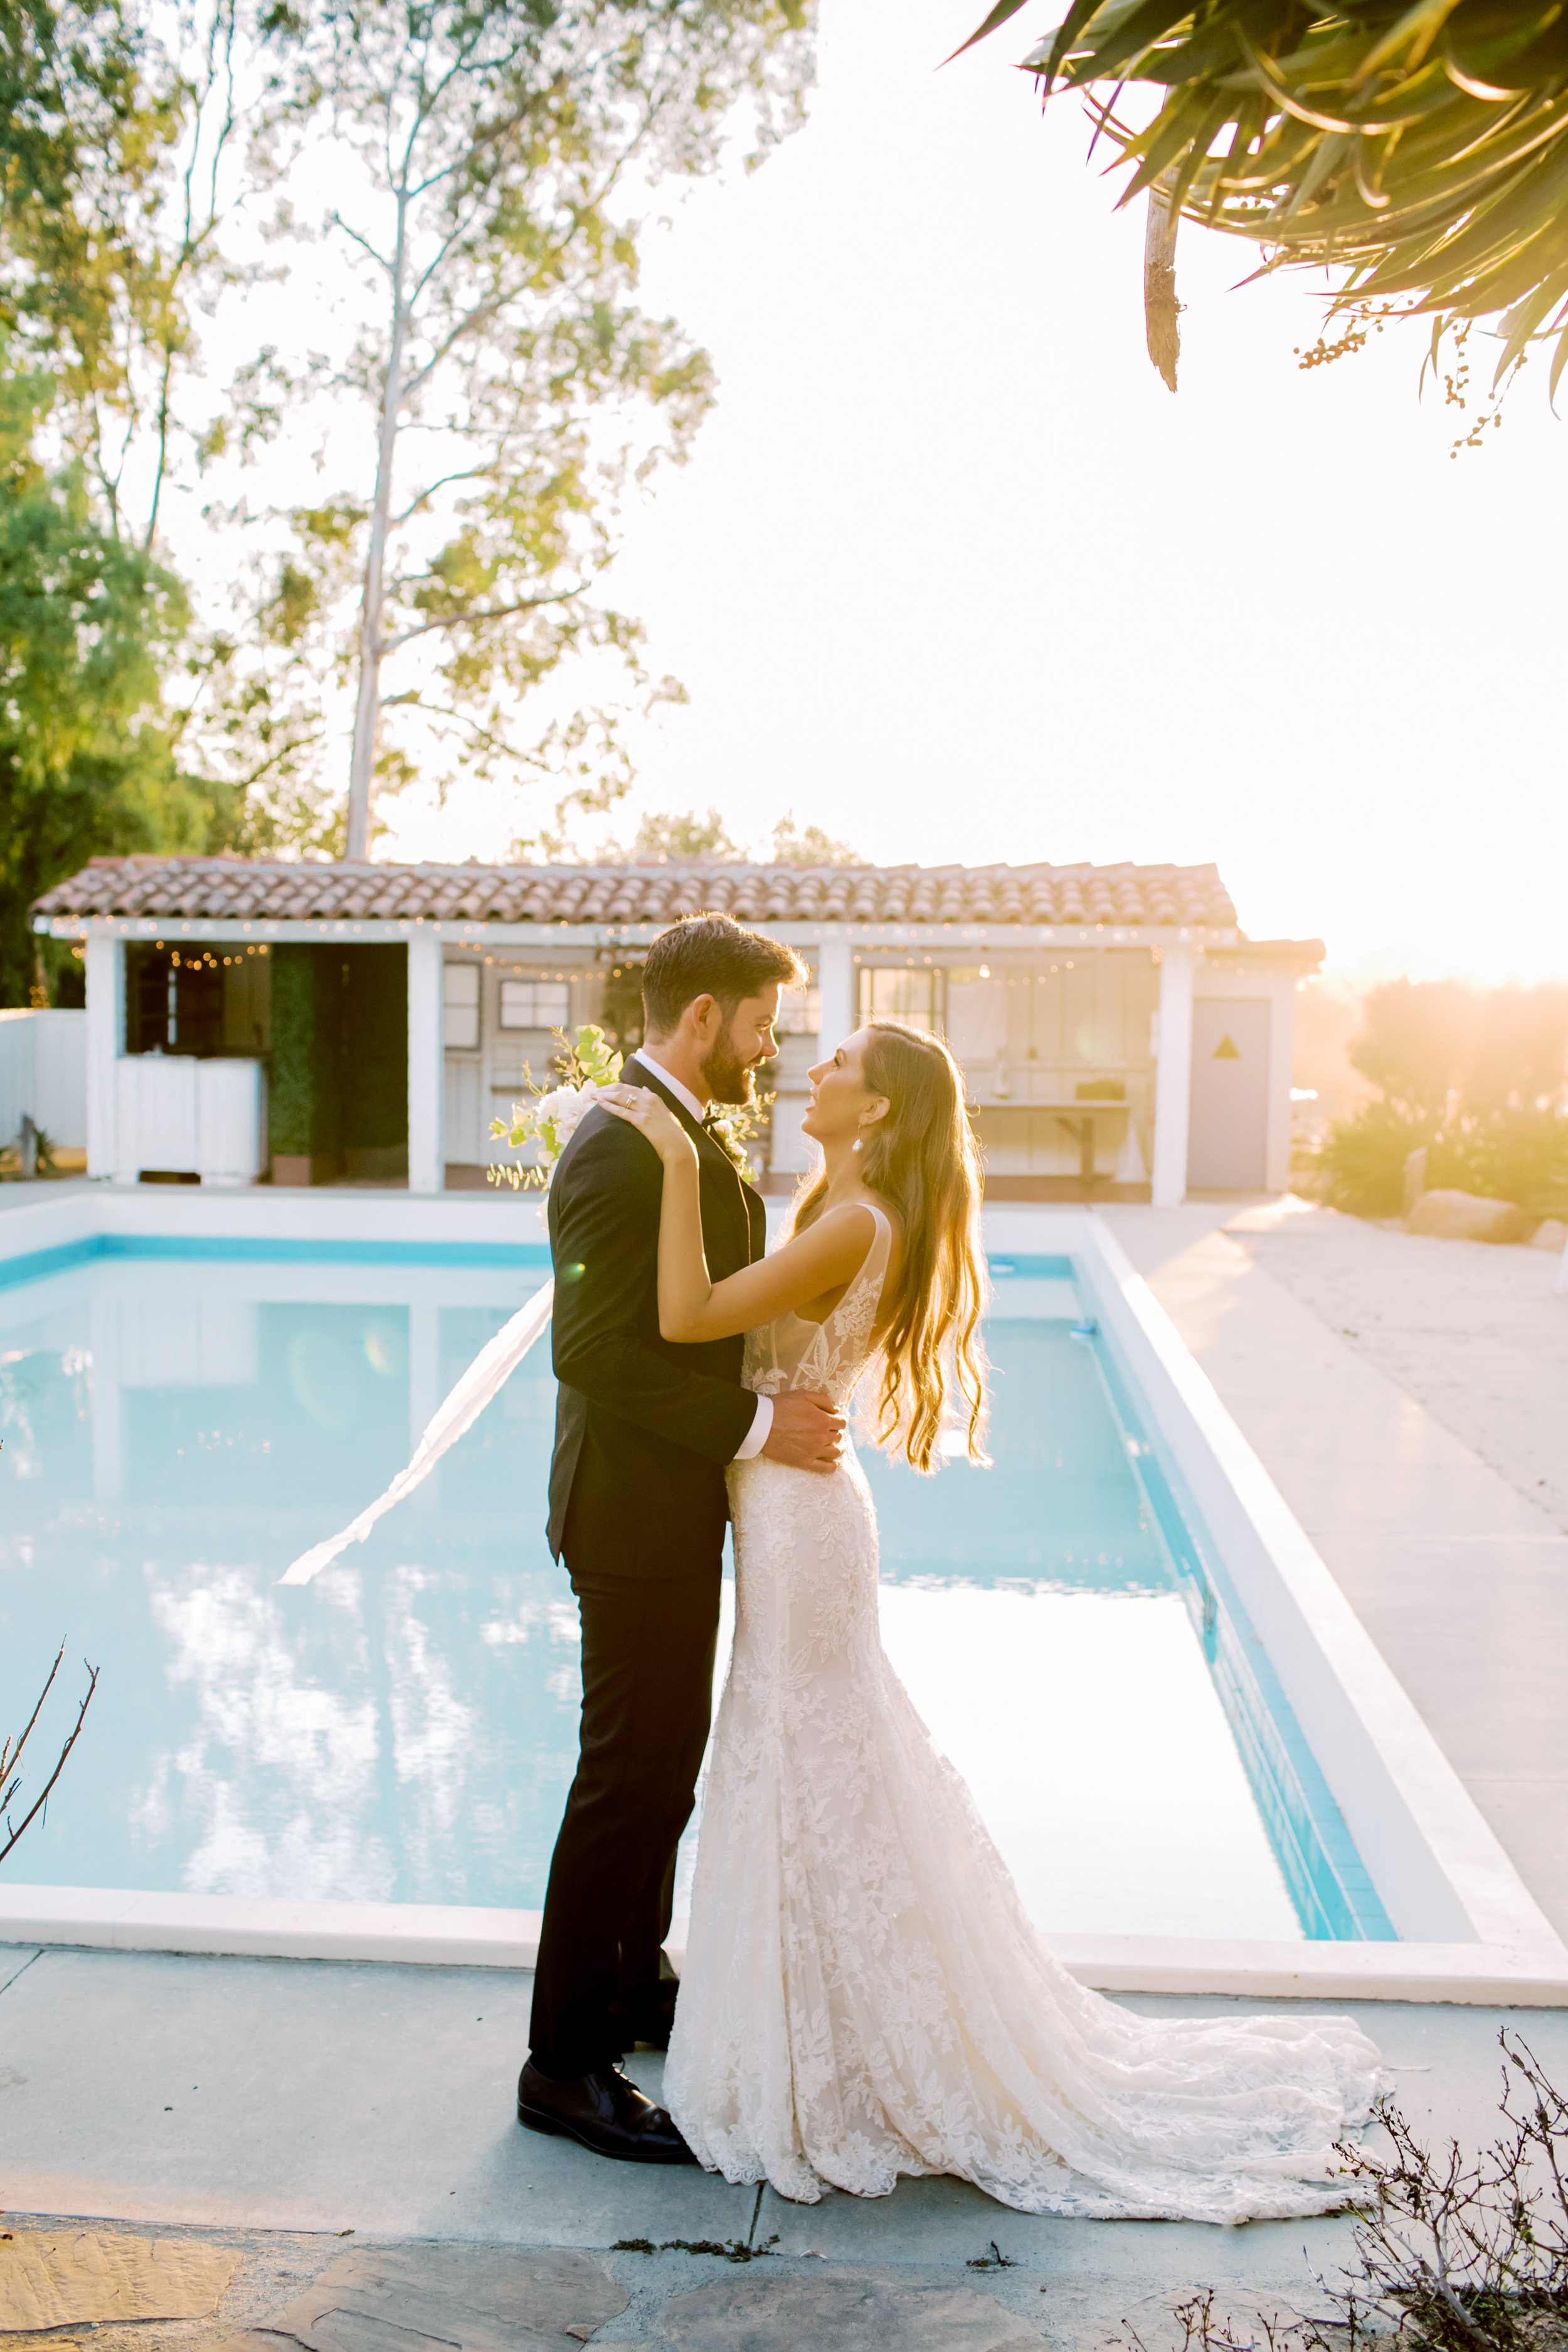 Romantics - Austin + Alexis' Wedding - Natalie Schutt Photography-115.jpg